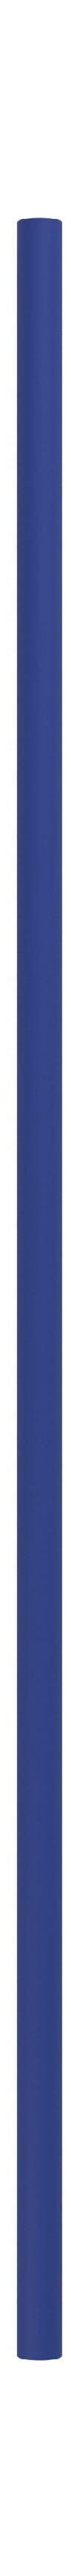 Sistema de estantería Moebe/Pierna de estantería de pared 85 cm, azul profundo